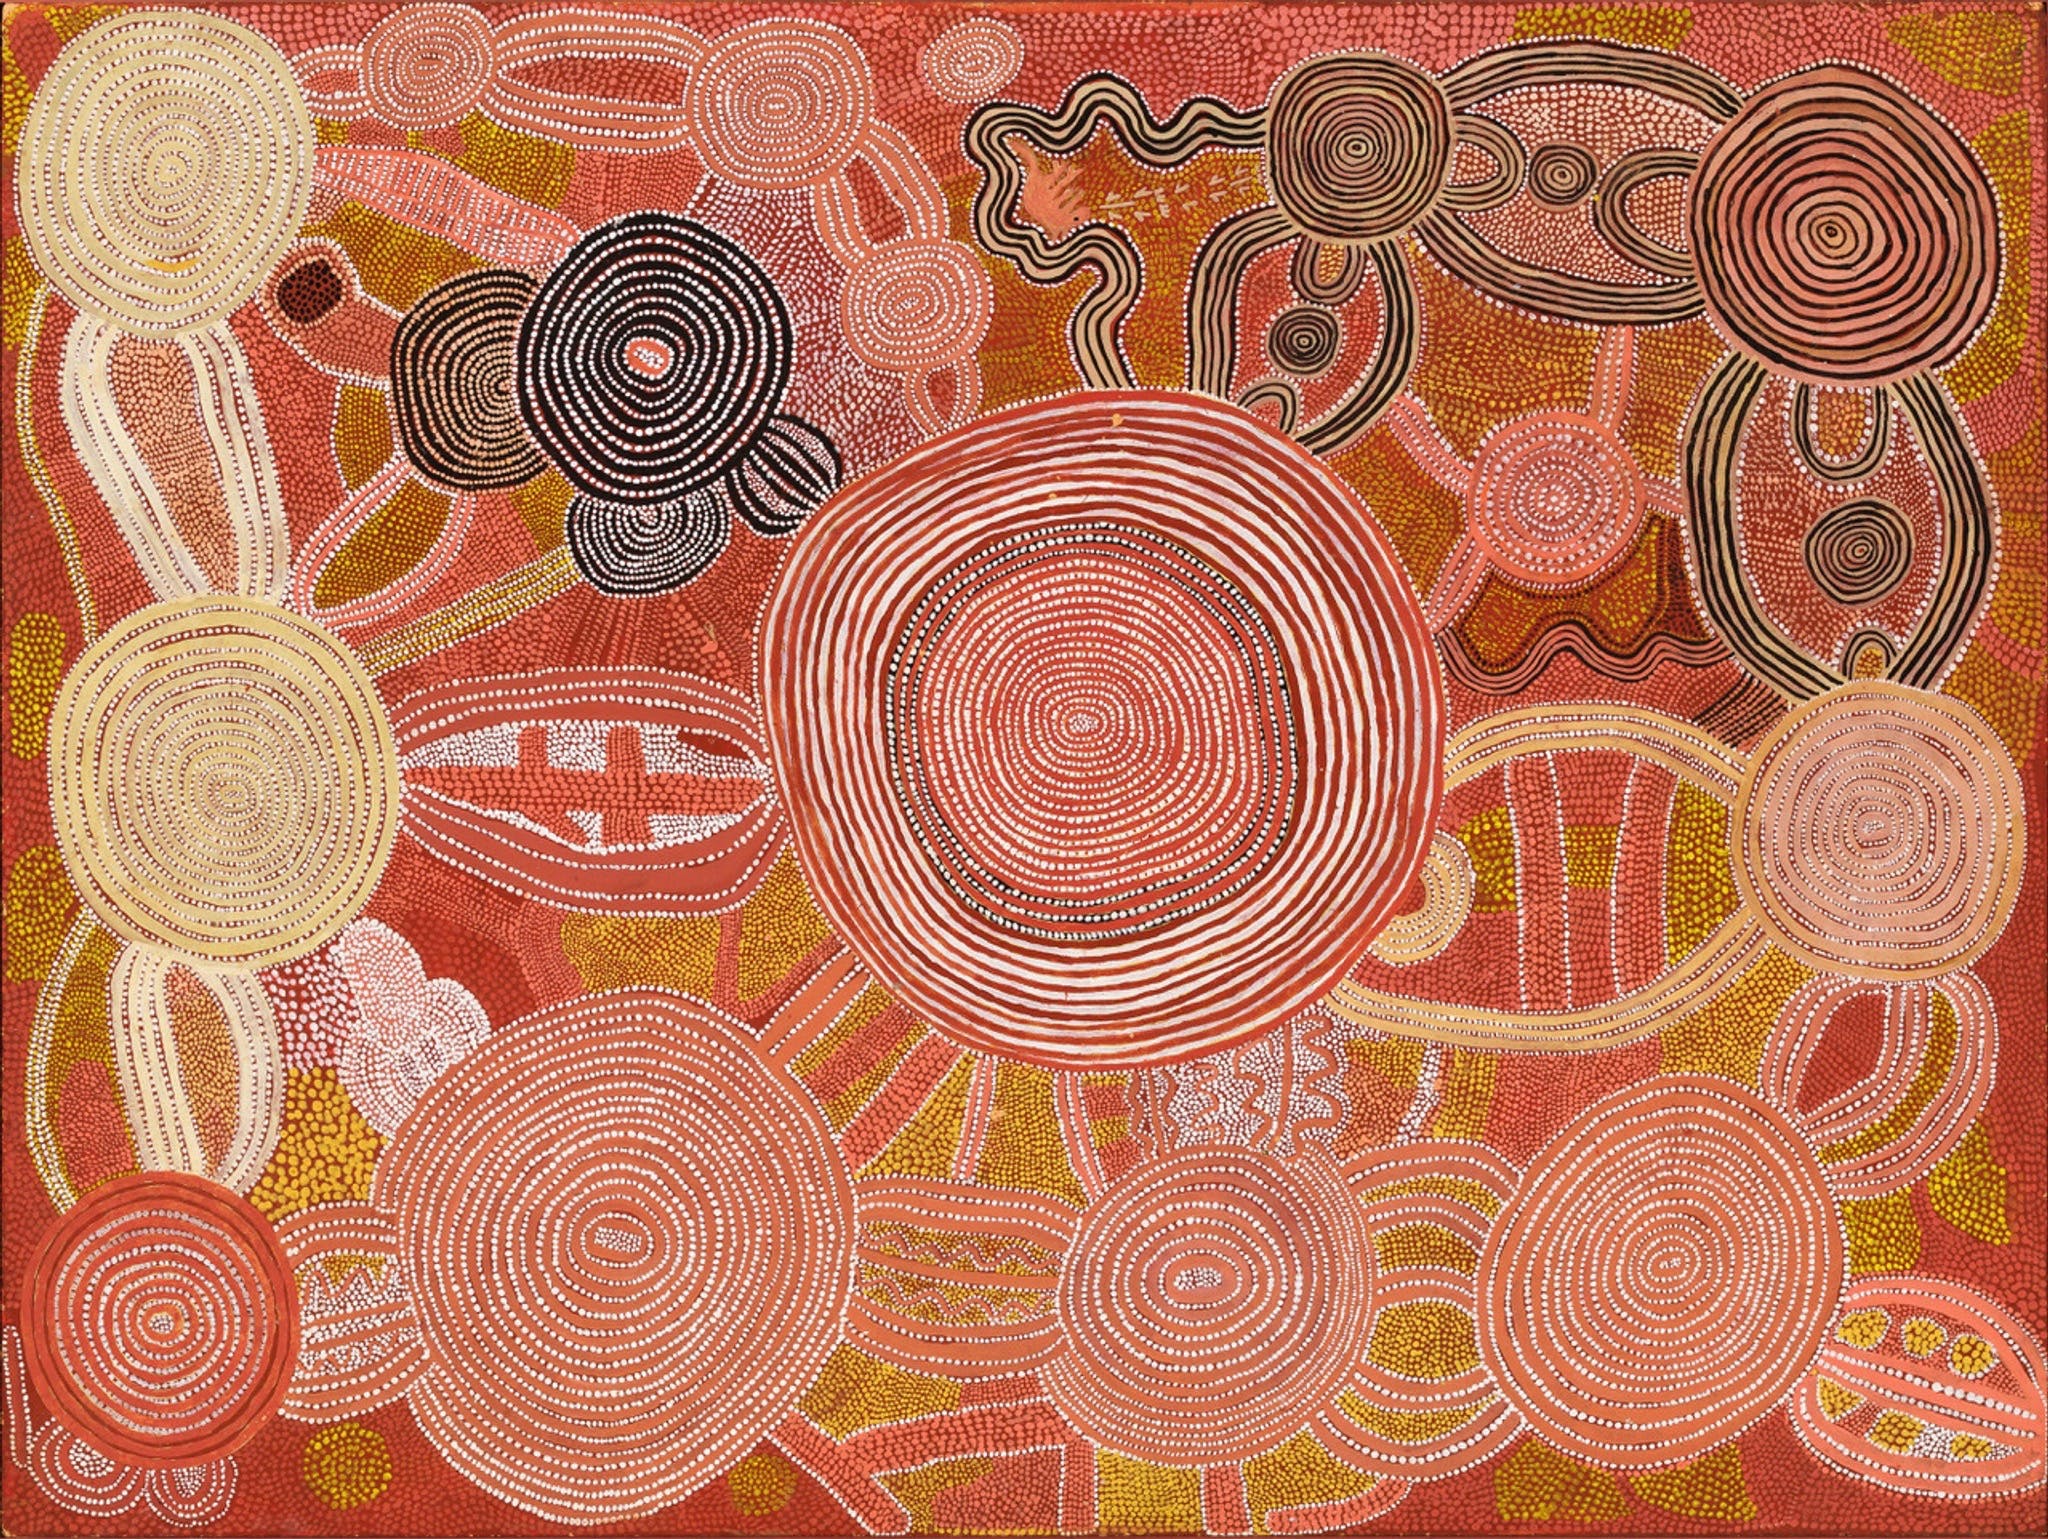 Reverence Exhibition of Australian Indigenous Art - Port Augusta Accommodation